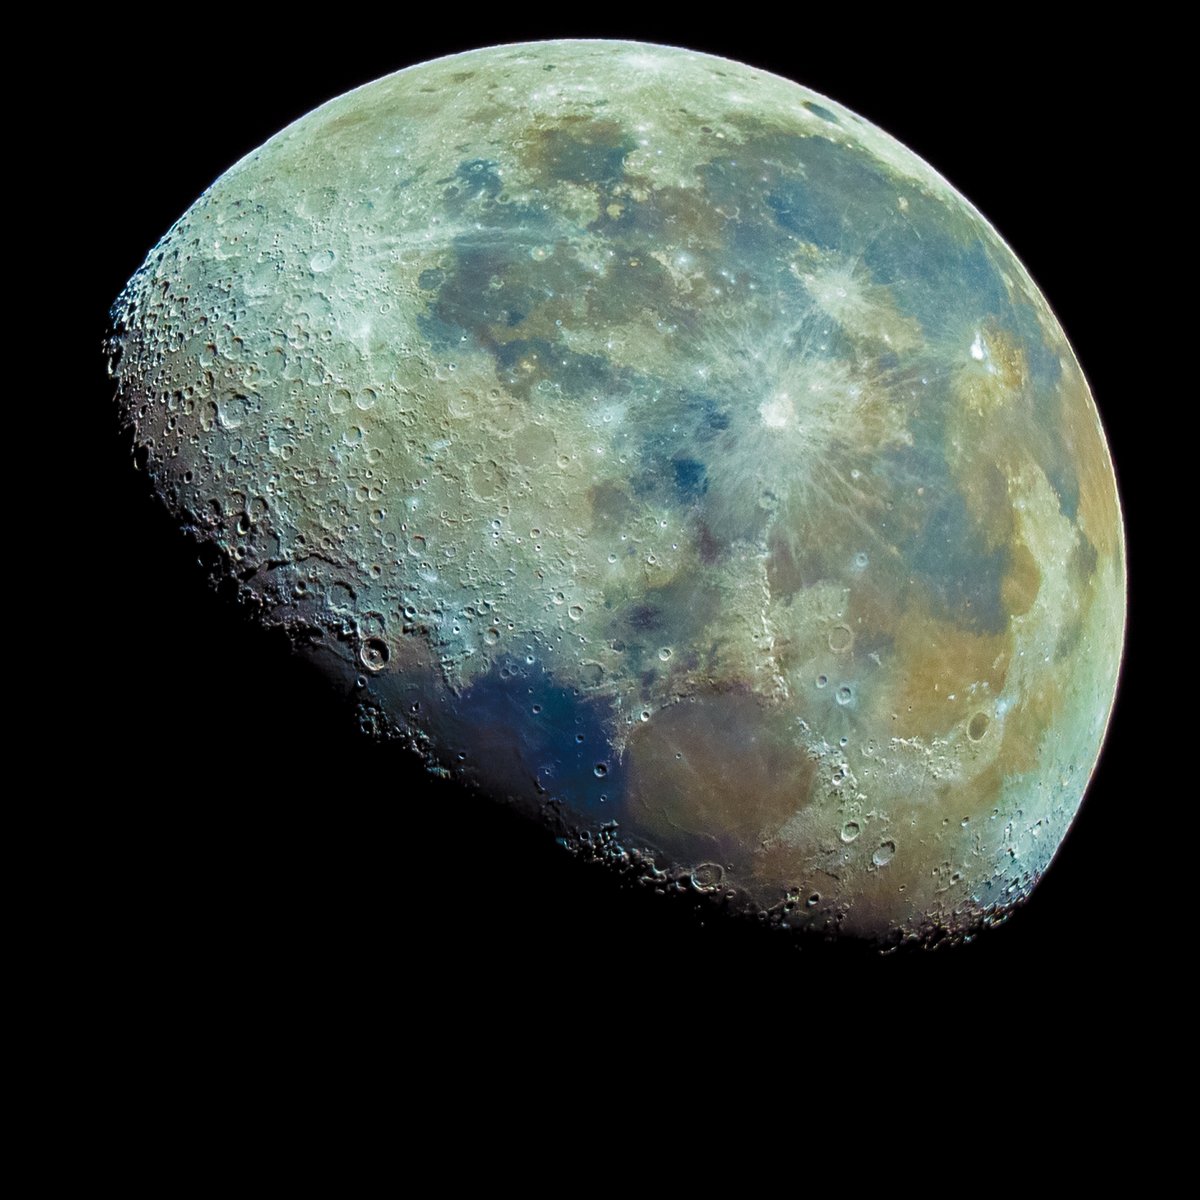 Luna mineral del 19-11-2016 por la madrugada